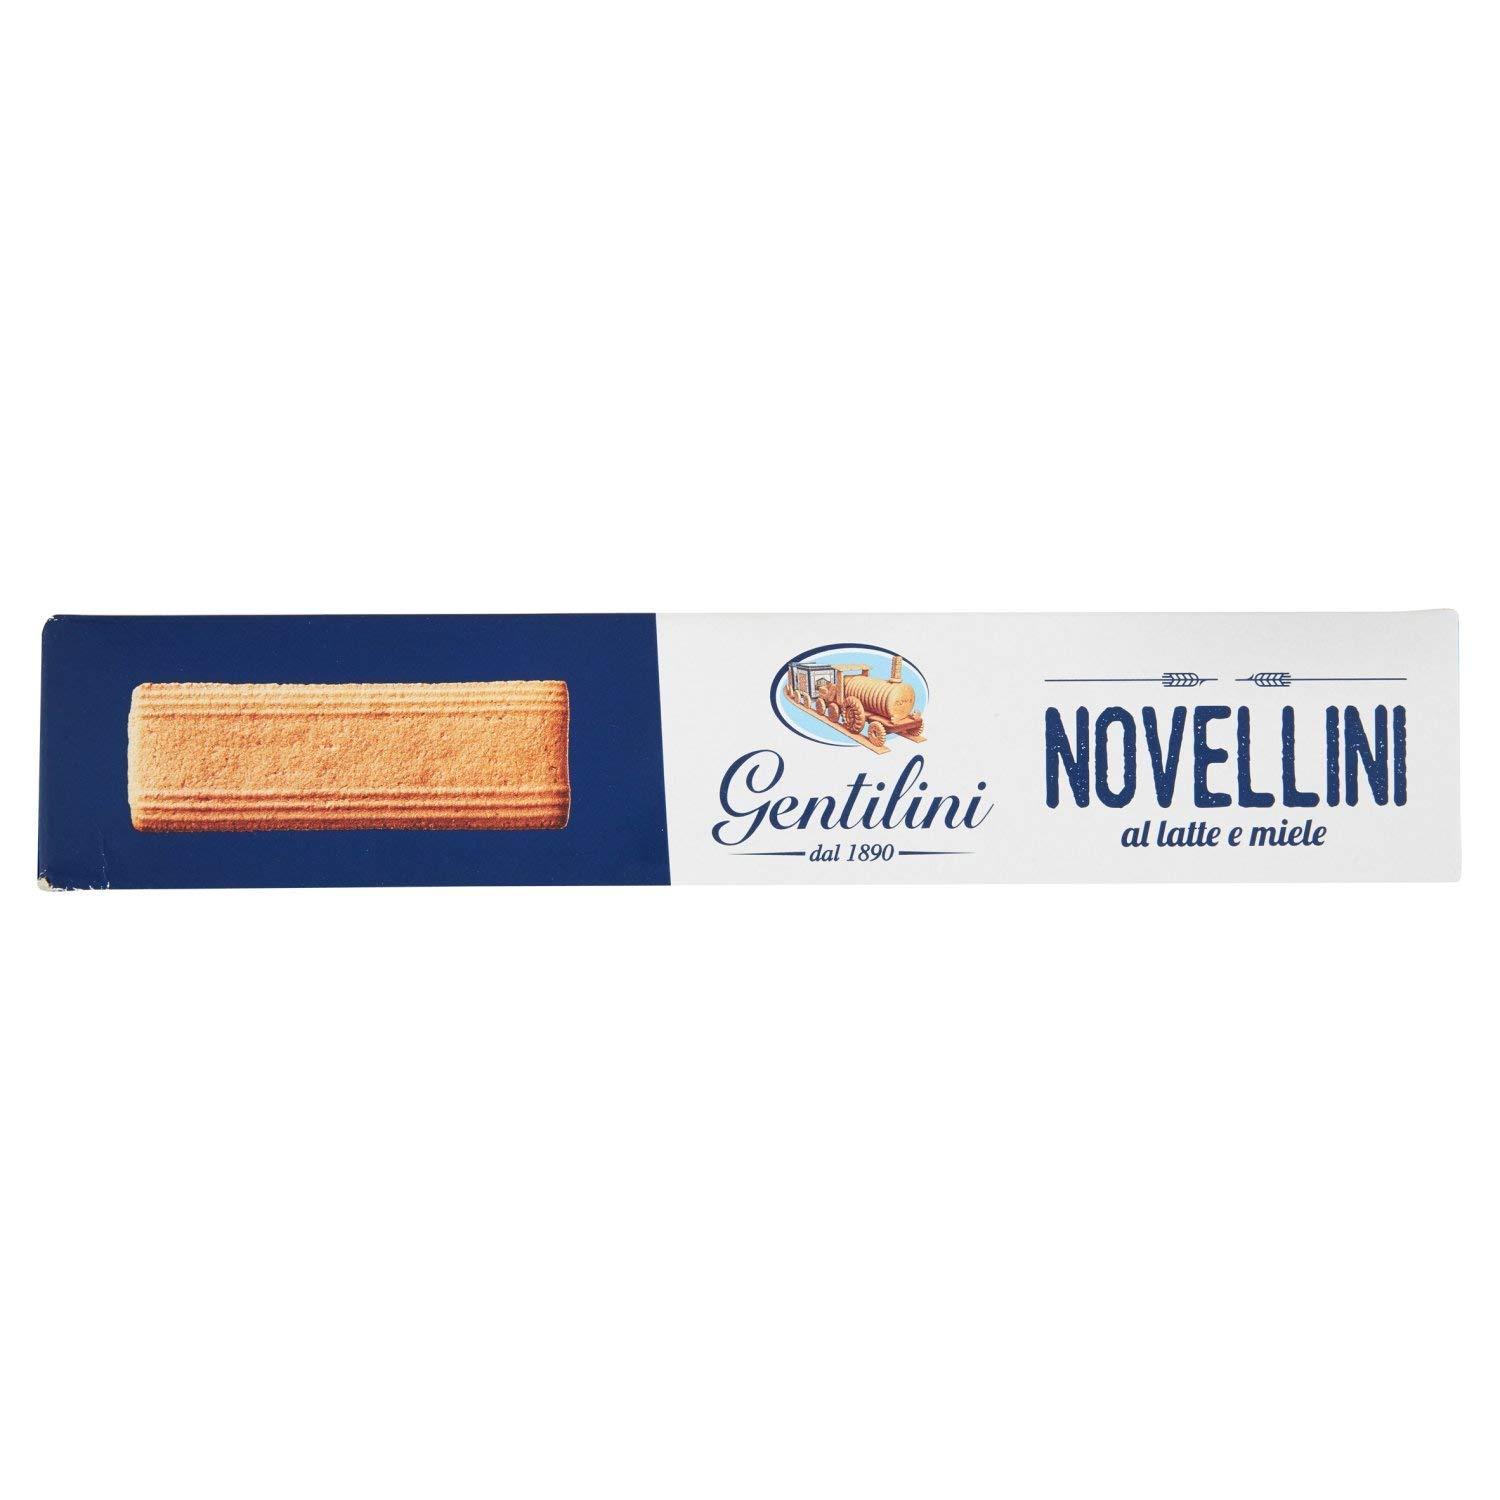 biscotti-novellini-gentilini-500gr-6